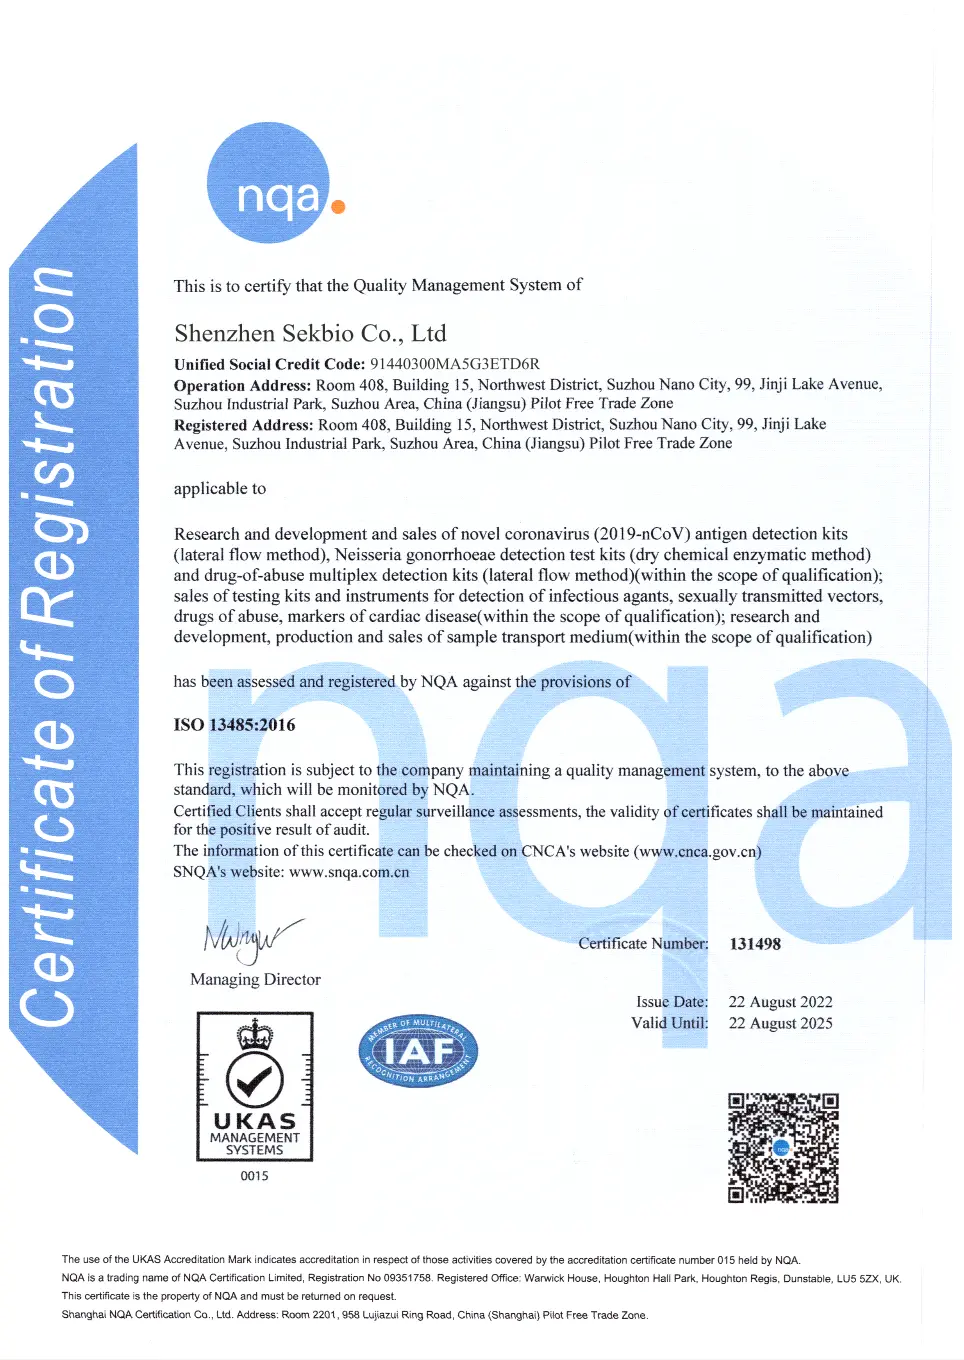 Sekbio IVD Raw Materials Certificate